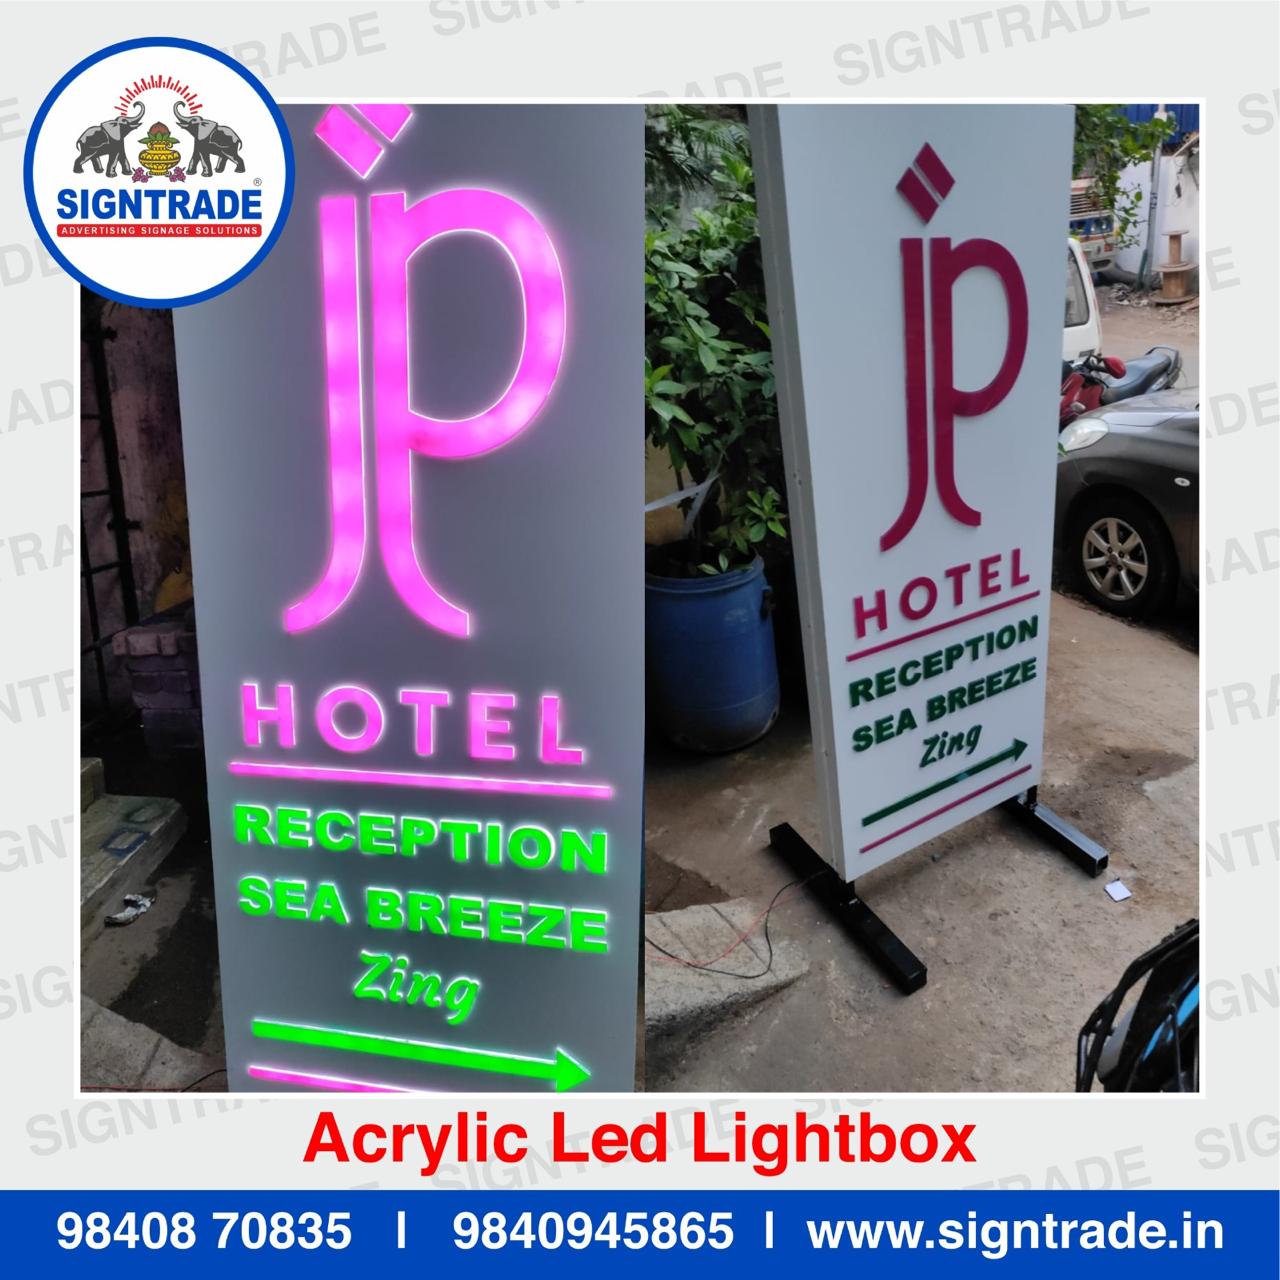 Acrylic LED Light Box in Chennai